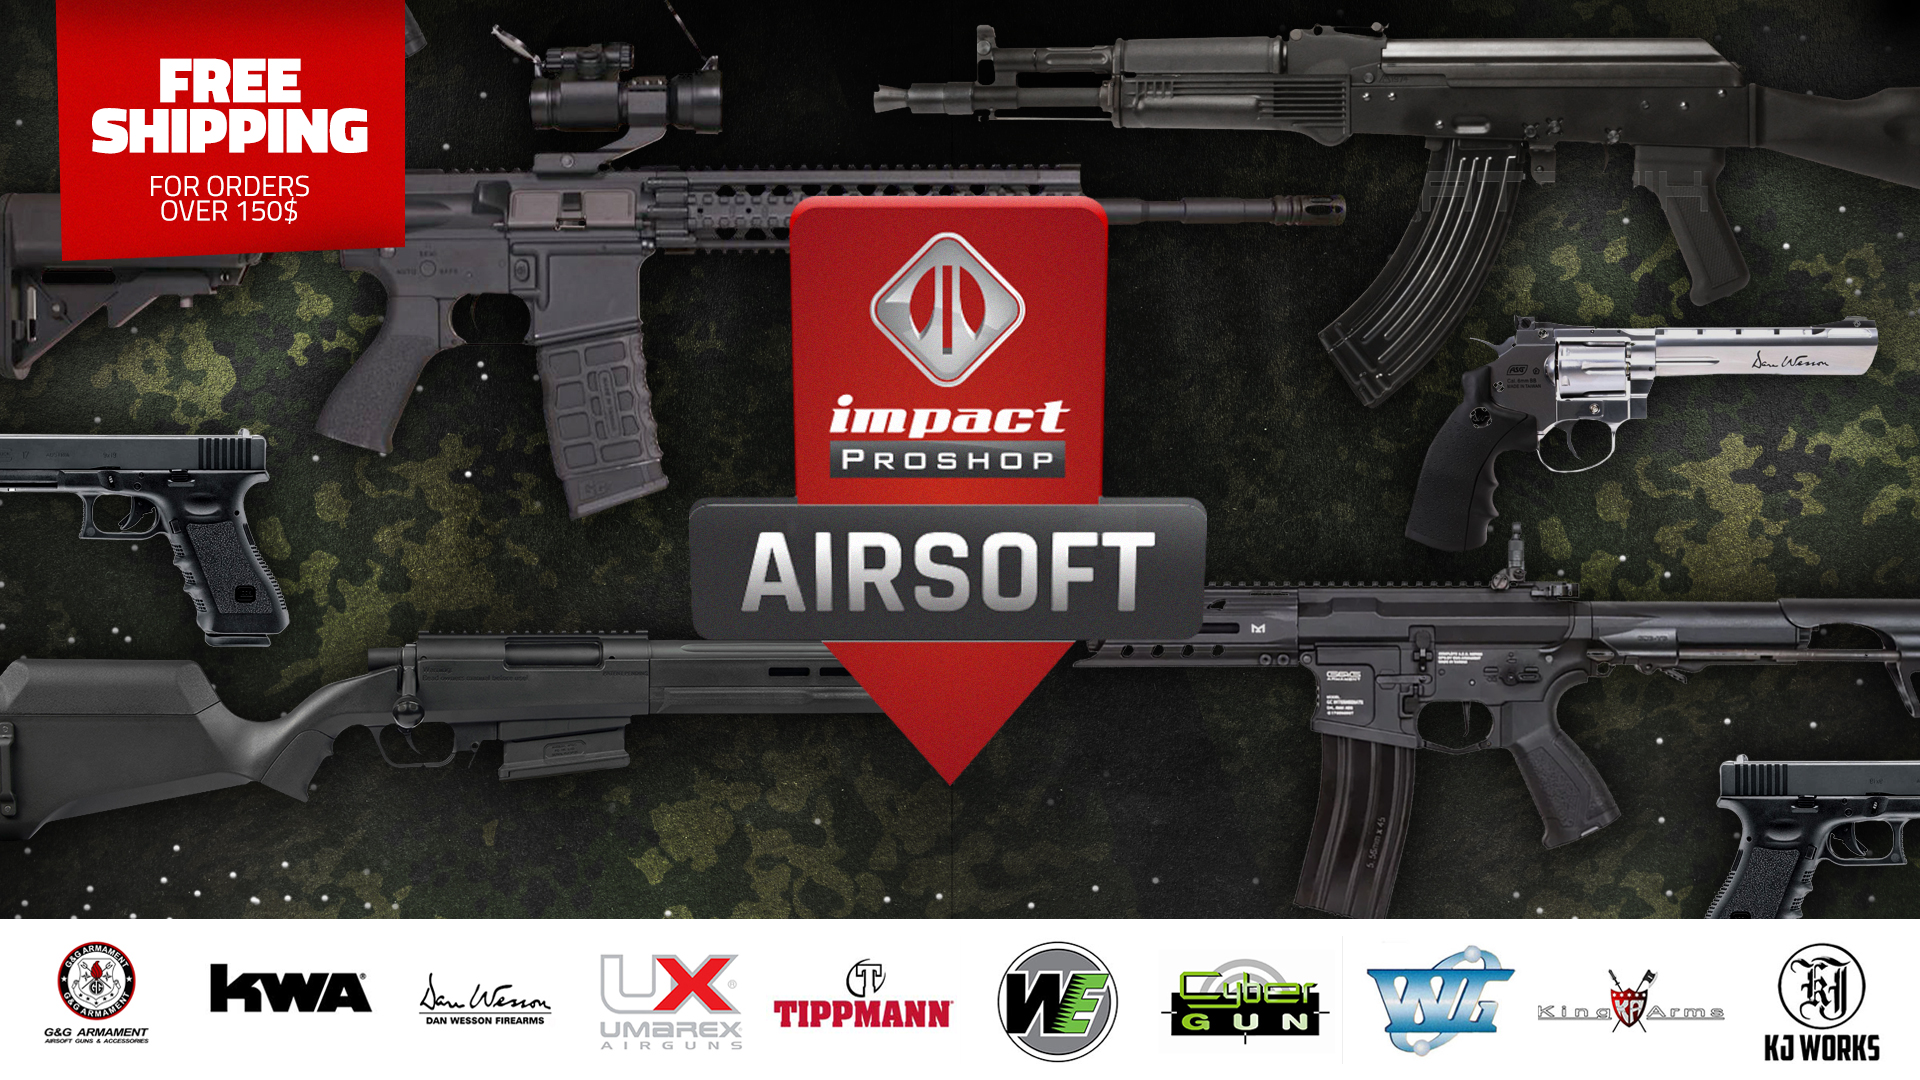 Fusils airsoft disponibles, Impact Proshop